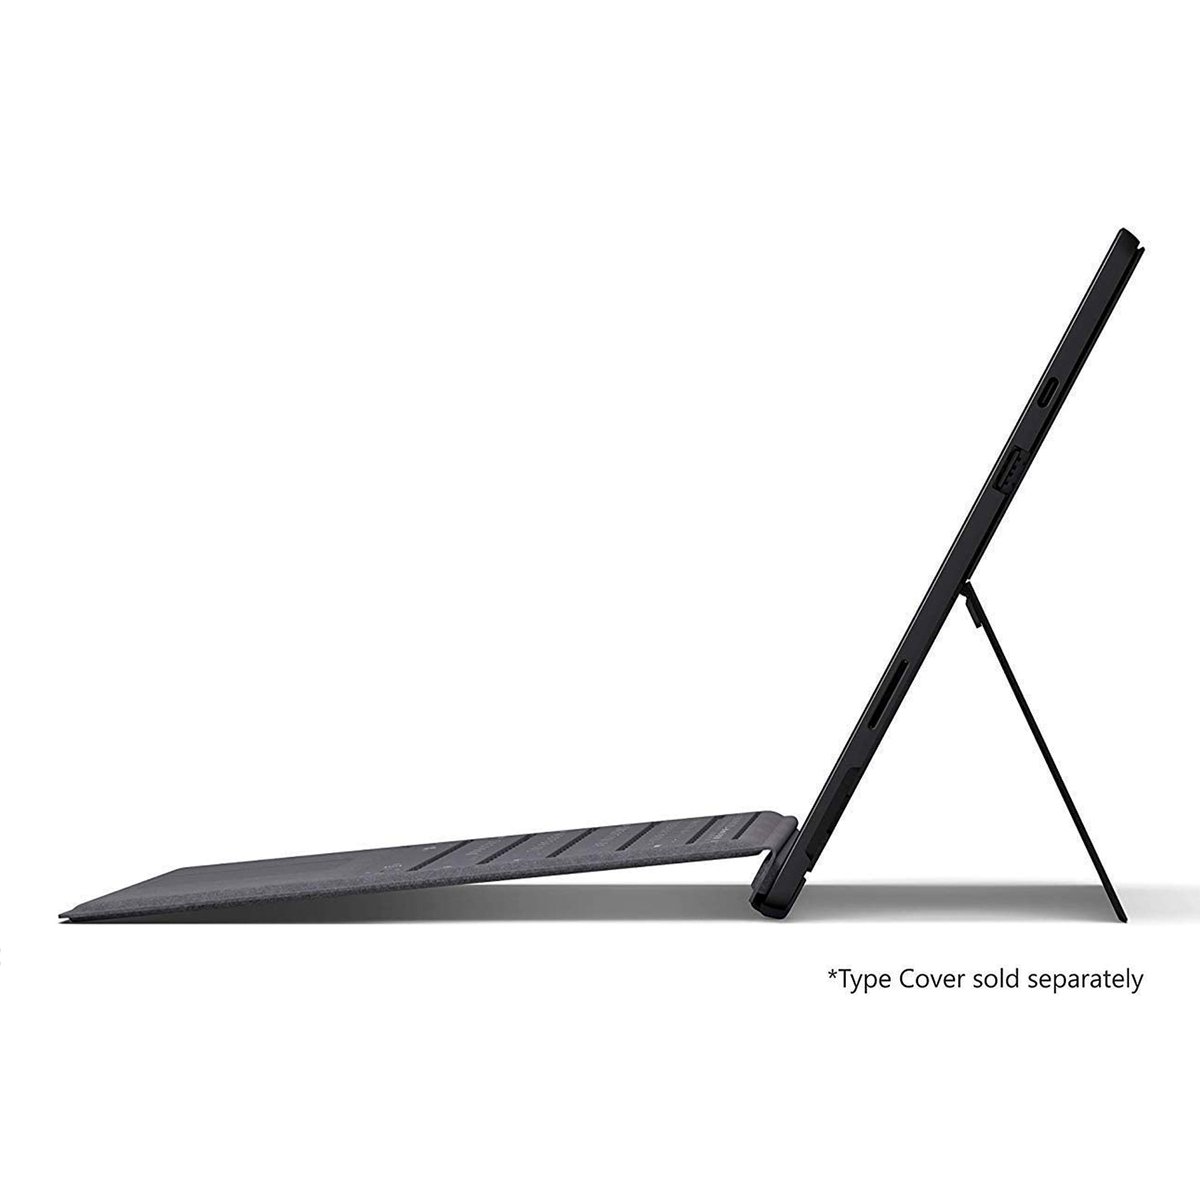 Microsoft Surface Pro 7 (PUV-00020), 2-in-1 Laptop, Intel Core i5-1035G4, 12.3 Inch, 256GB SSD, 8GB RAM, Intel Iris Plus Graphics, Windows10, No Keyboard, Black